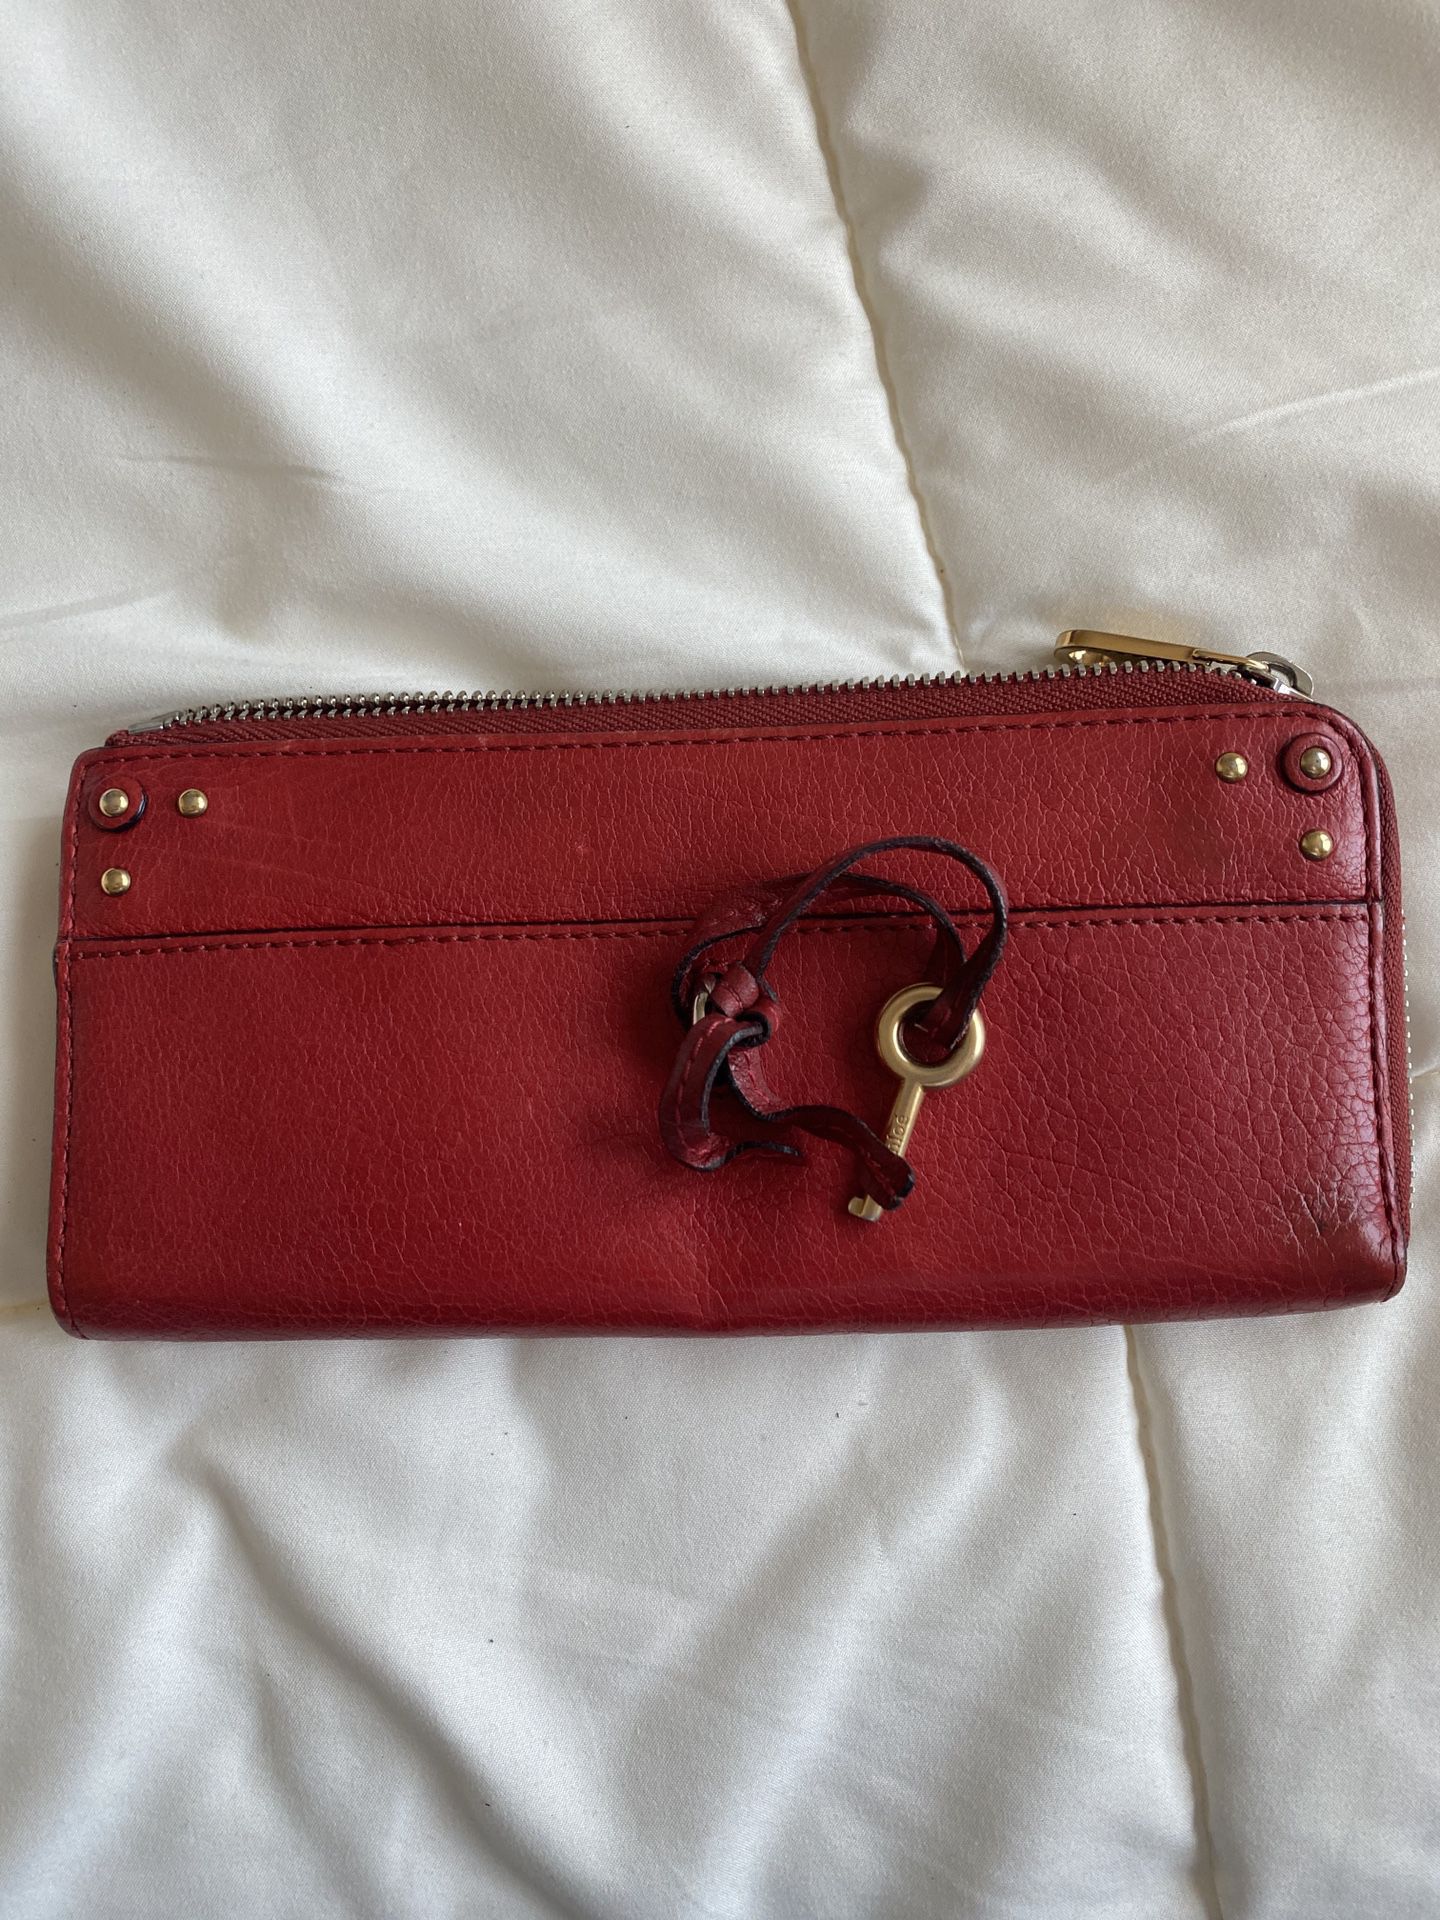 Chloe Paddington Red wallet